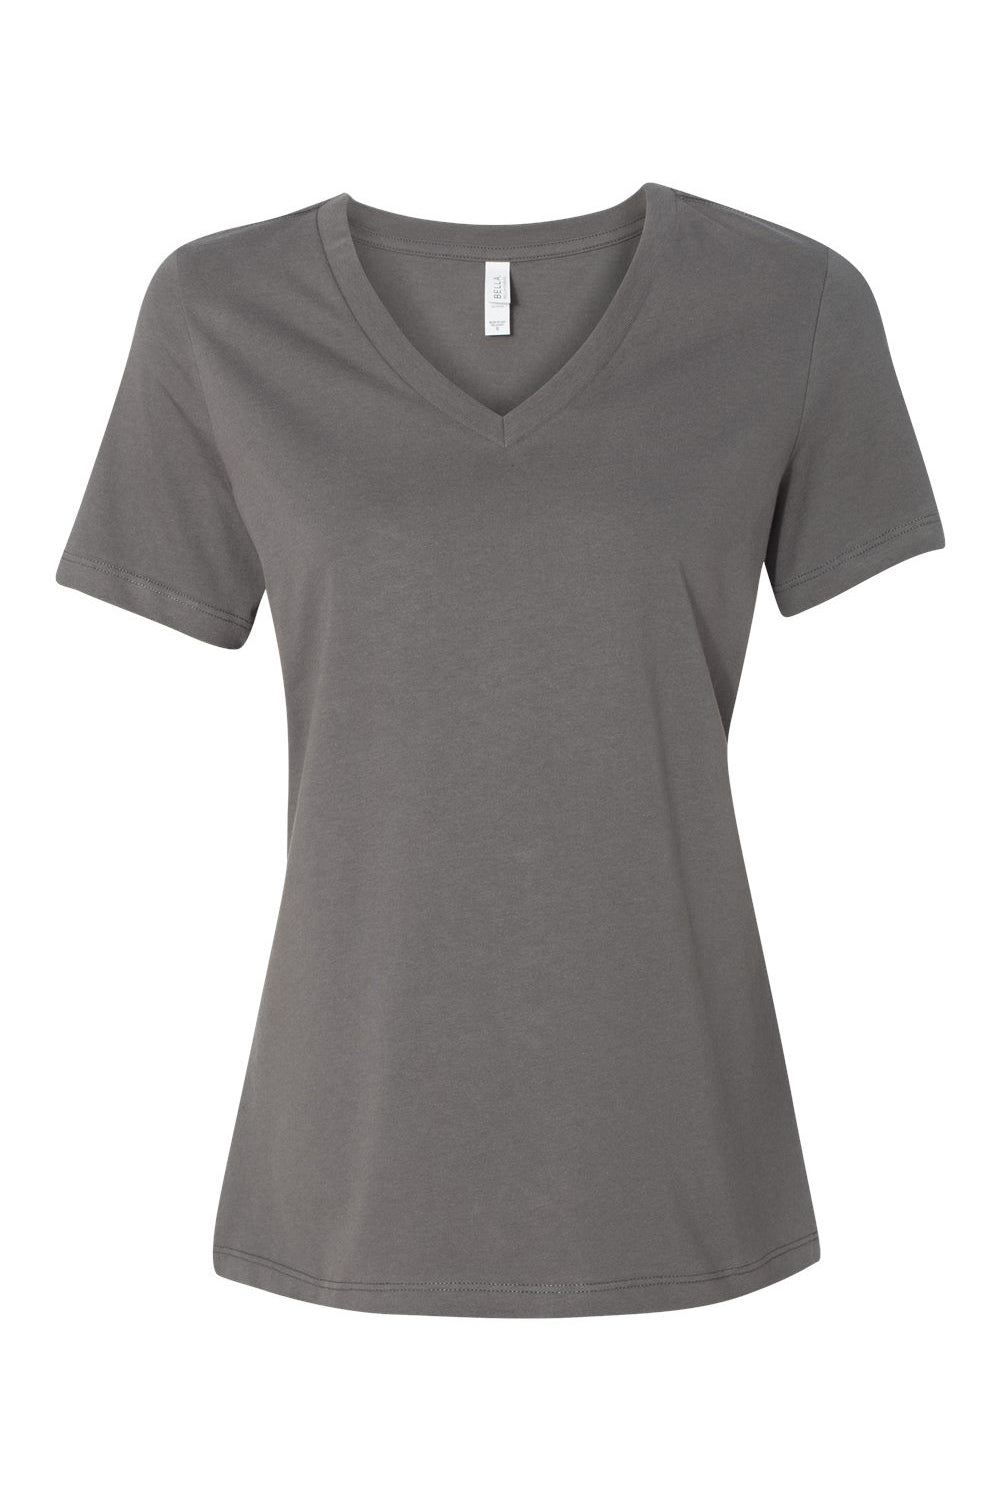 Bella + Canvas BC6405/6405 Womens Relaxed Jersey Short Sleeve V-Neck T-Shirt Asphalt Grey Flat Front